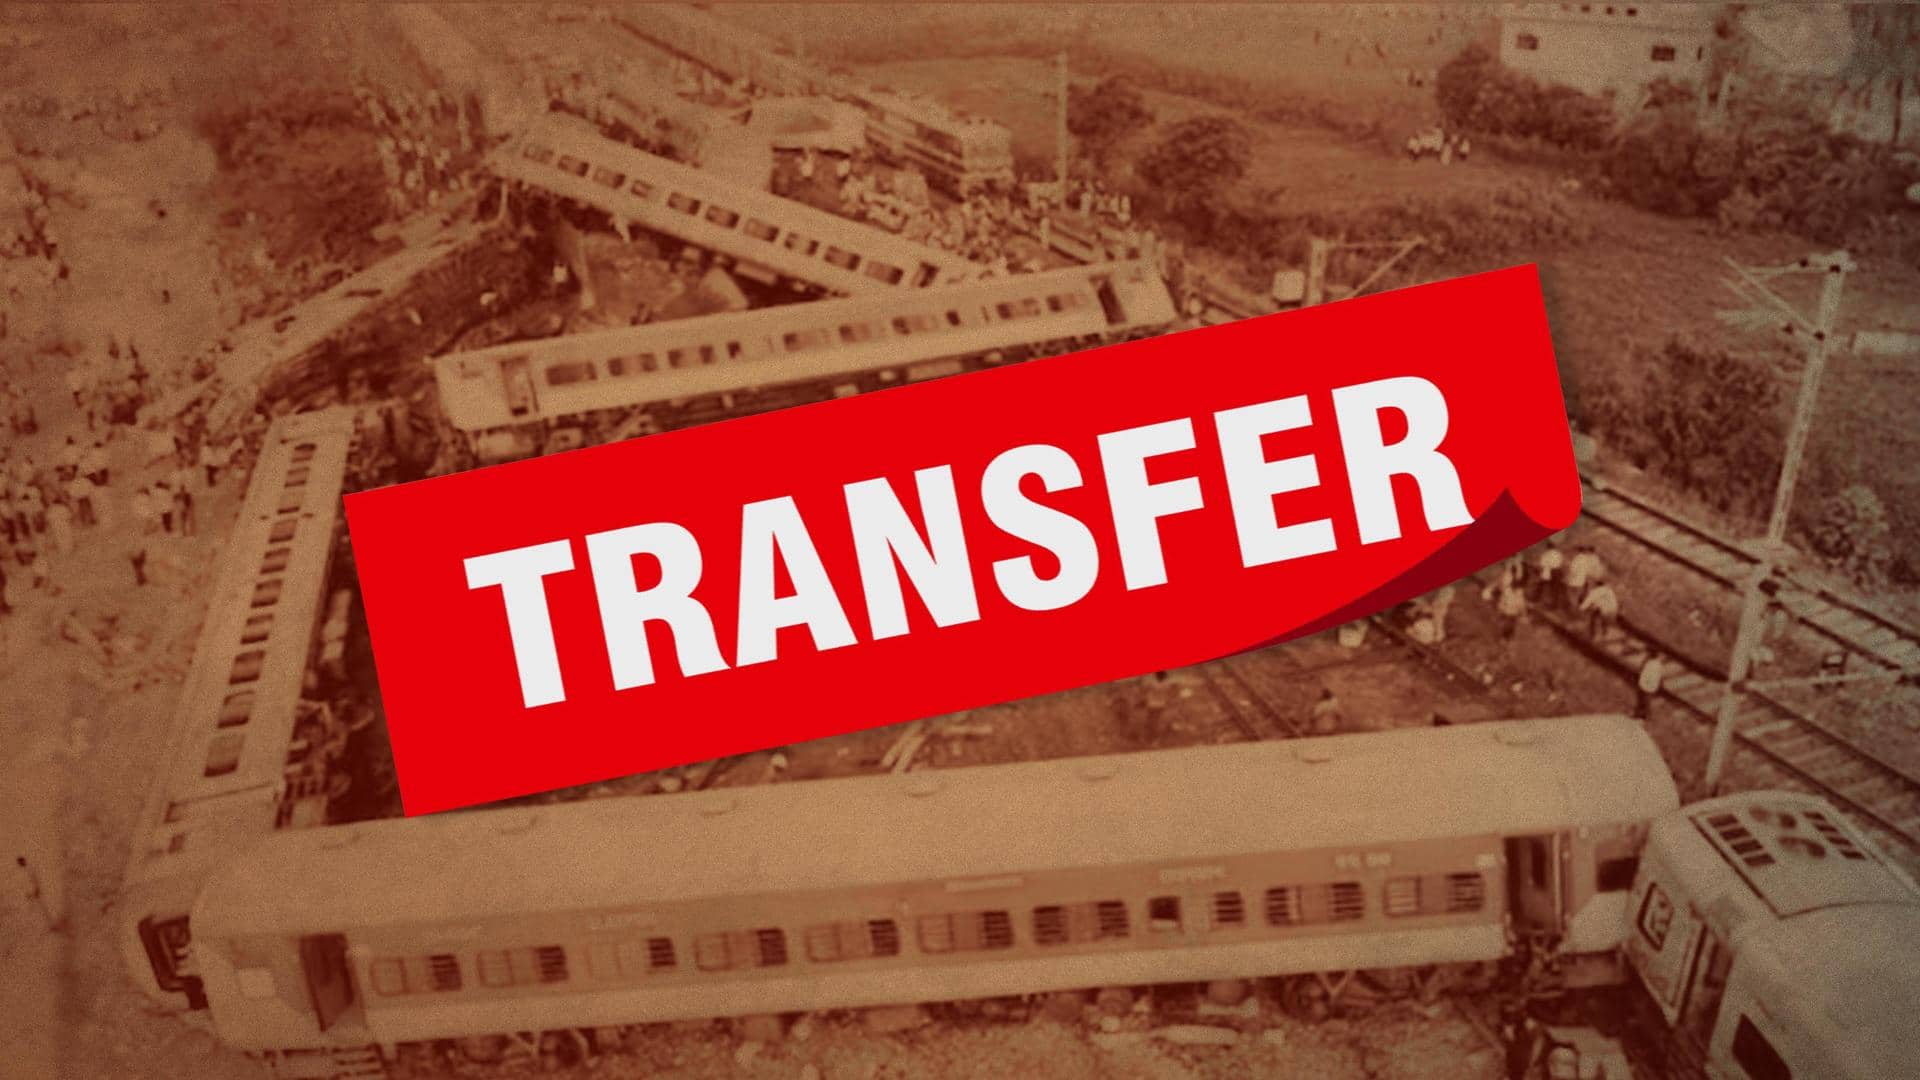 Weeks after Balasore train crash, Railways transfers 5 top officials